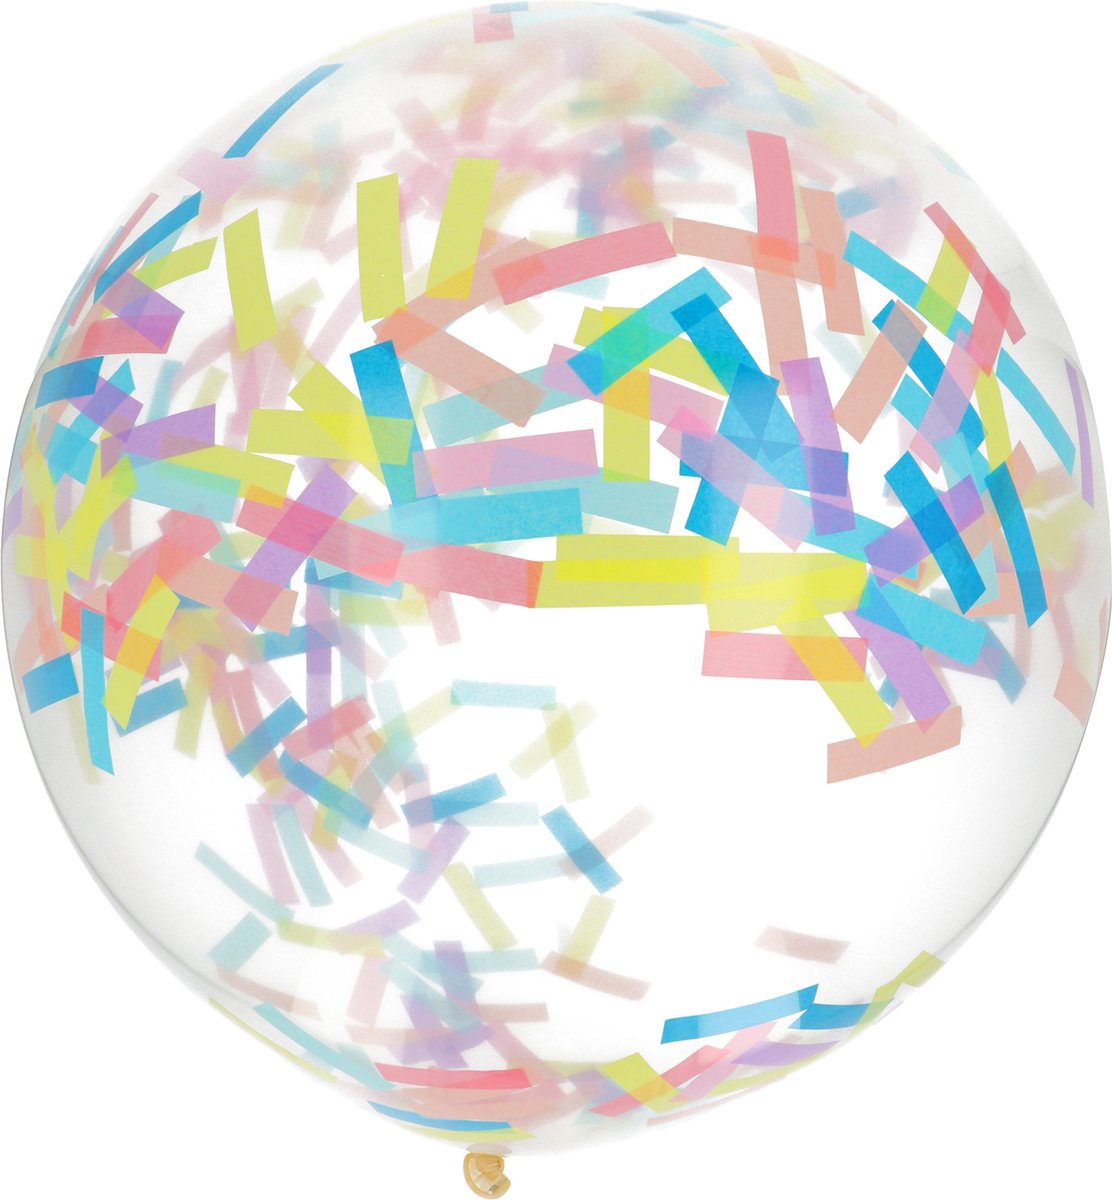 XL Confetti Ballon Candy Pastel